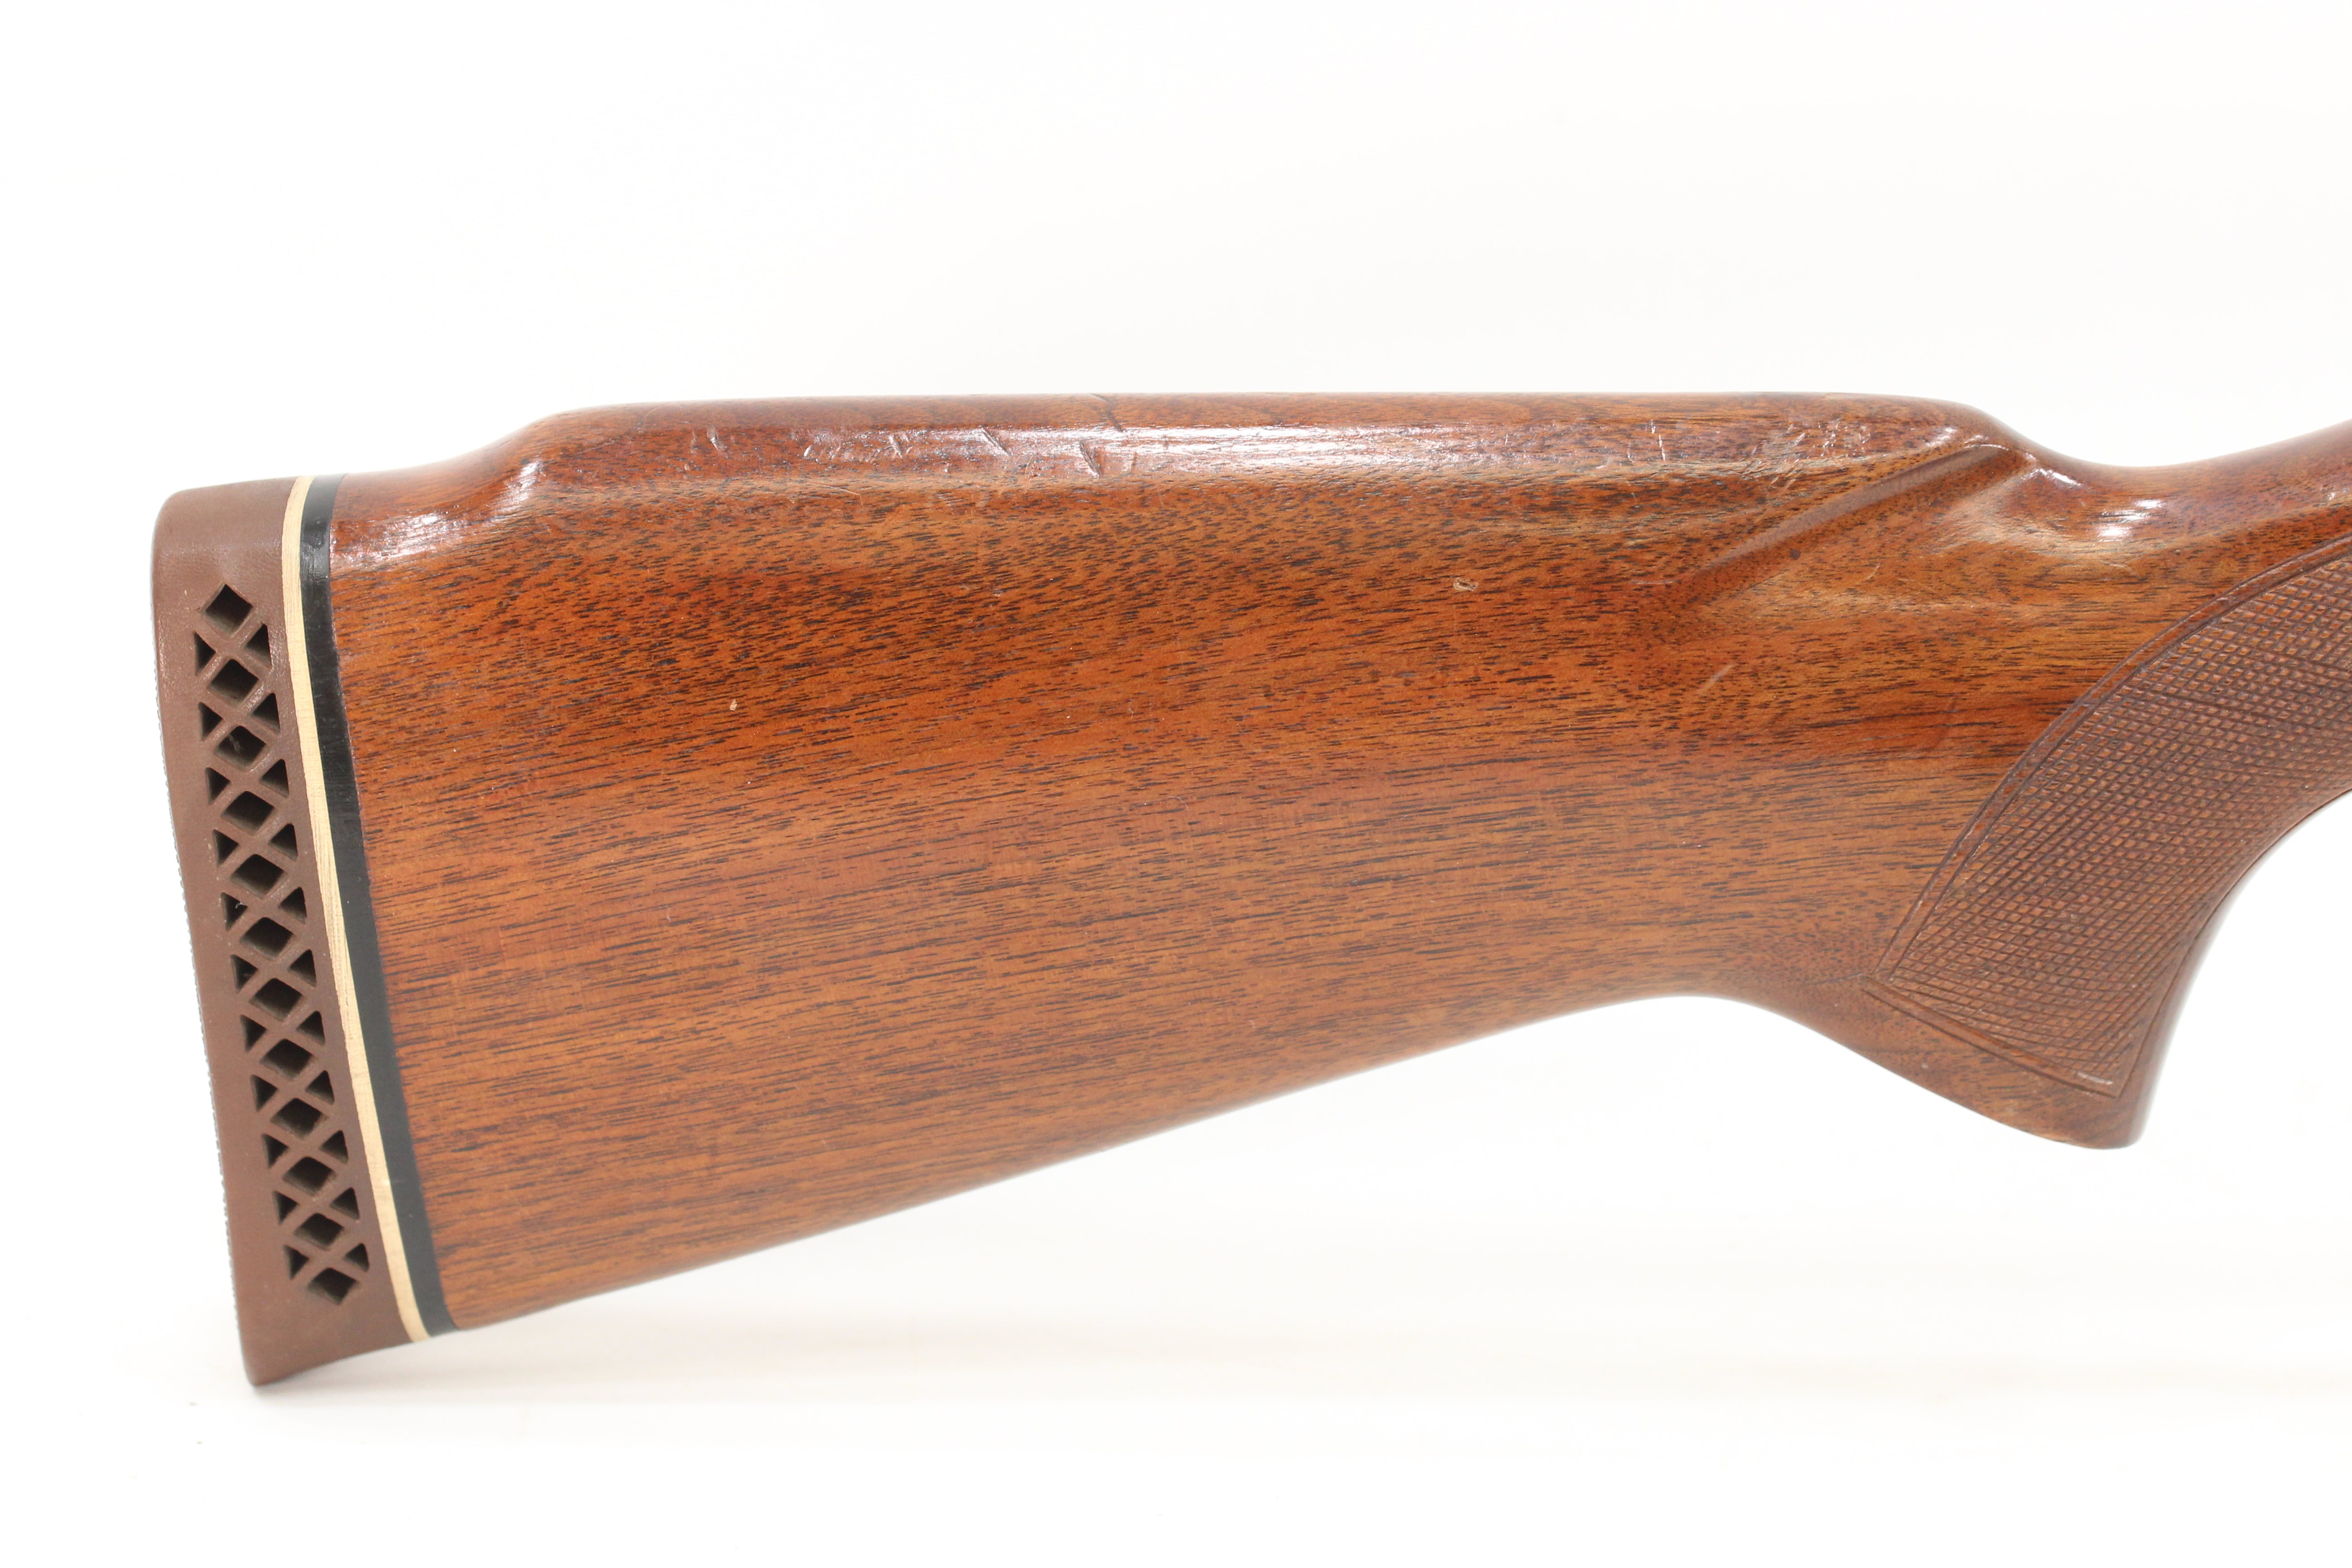 1952-1961 Monte Carlo Featherweight Rifle Stock - Shortened